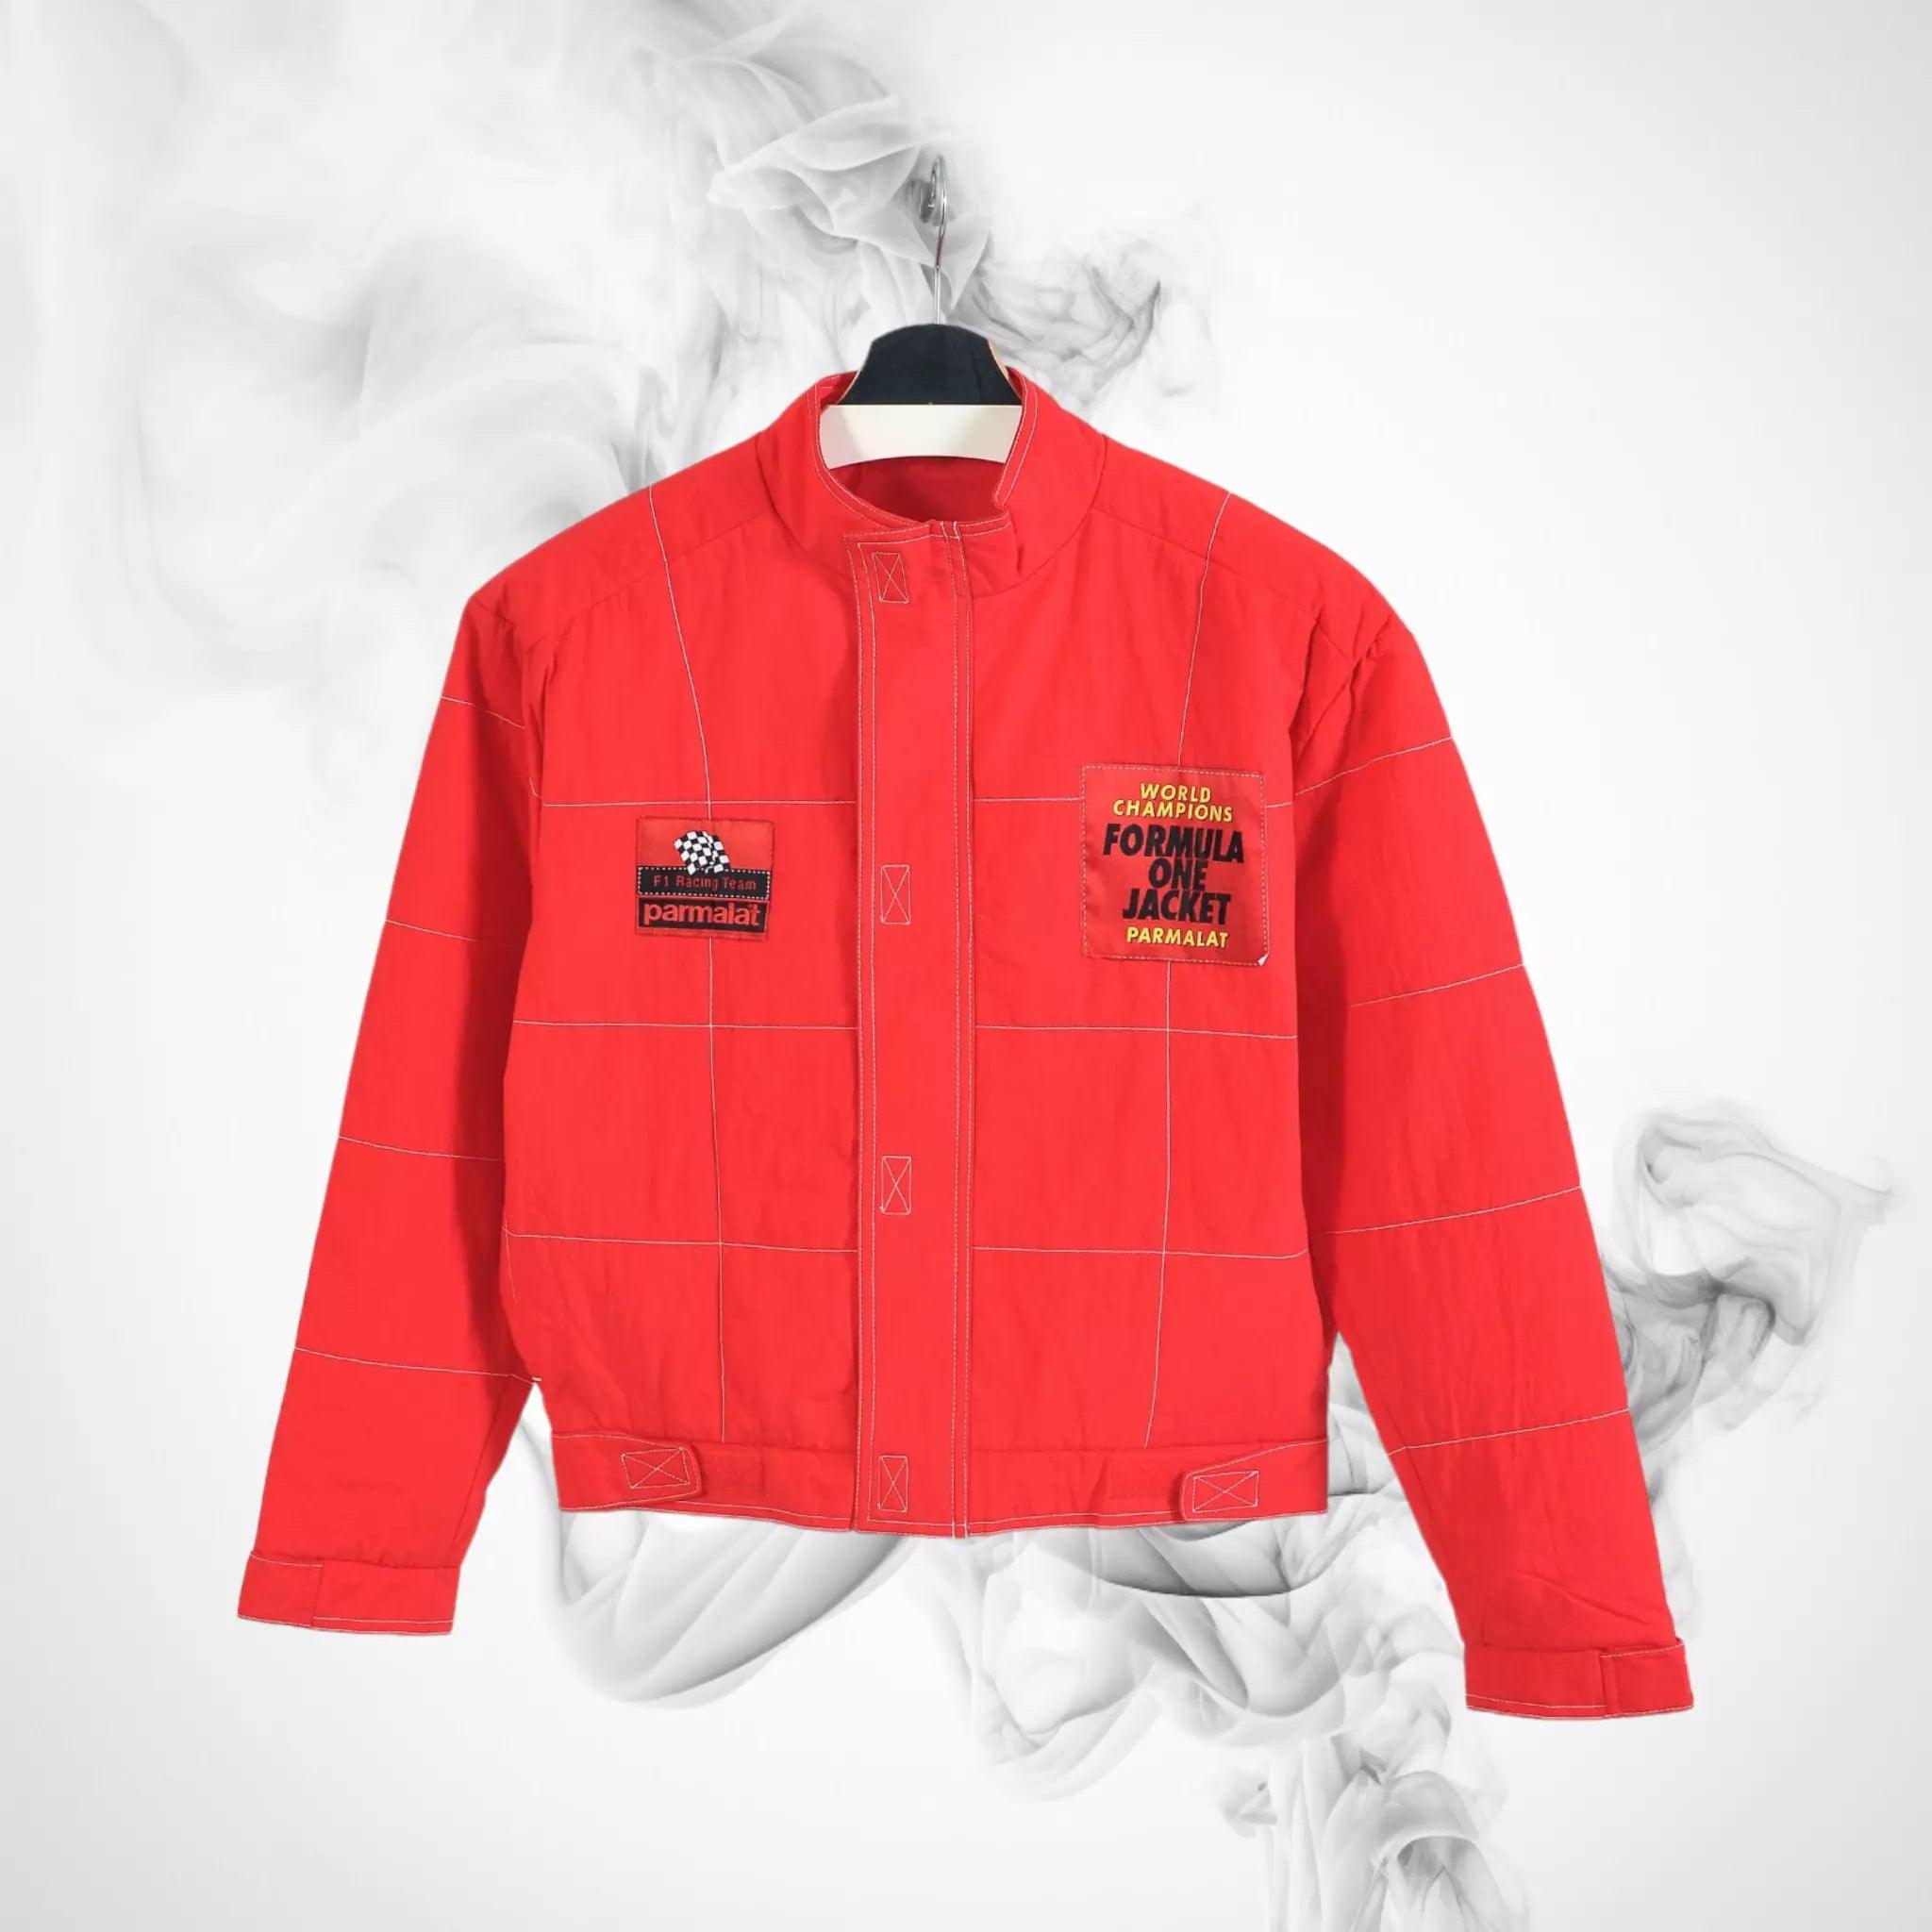 Vintage 80s FORMULA 1 Parmalat racing jacket - Dash Racegear 